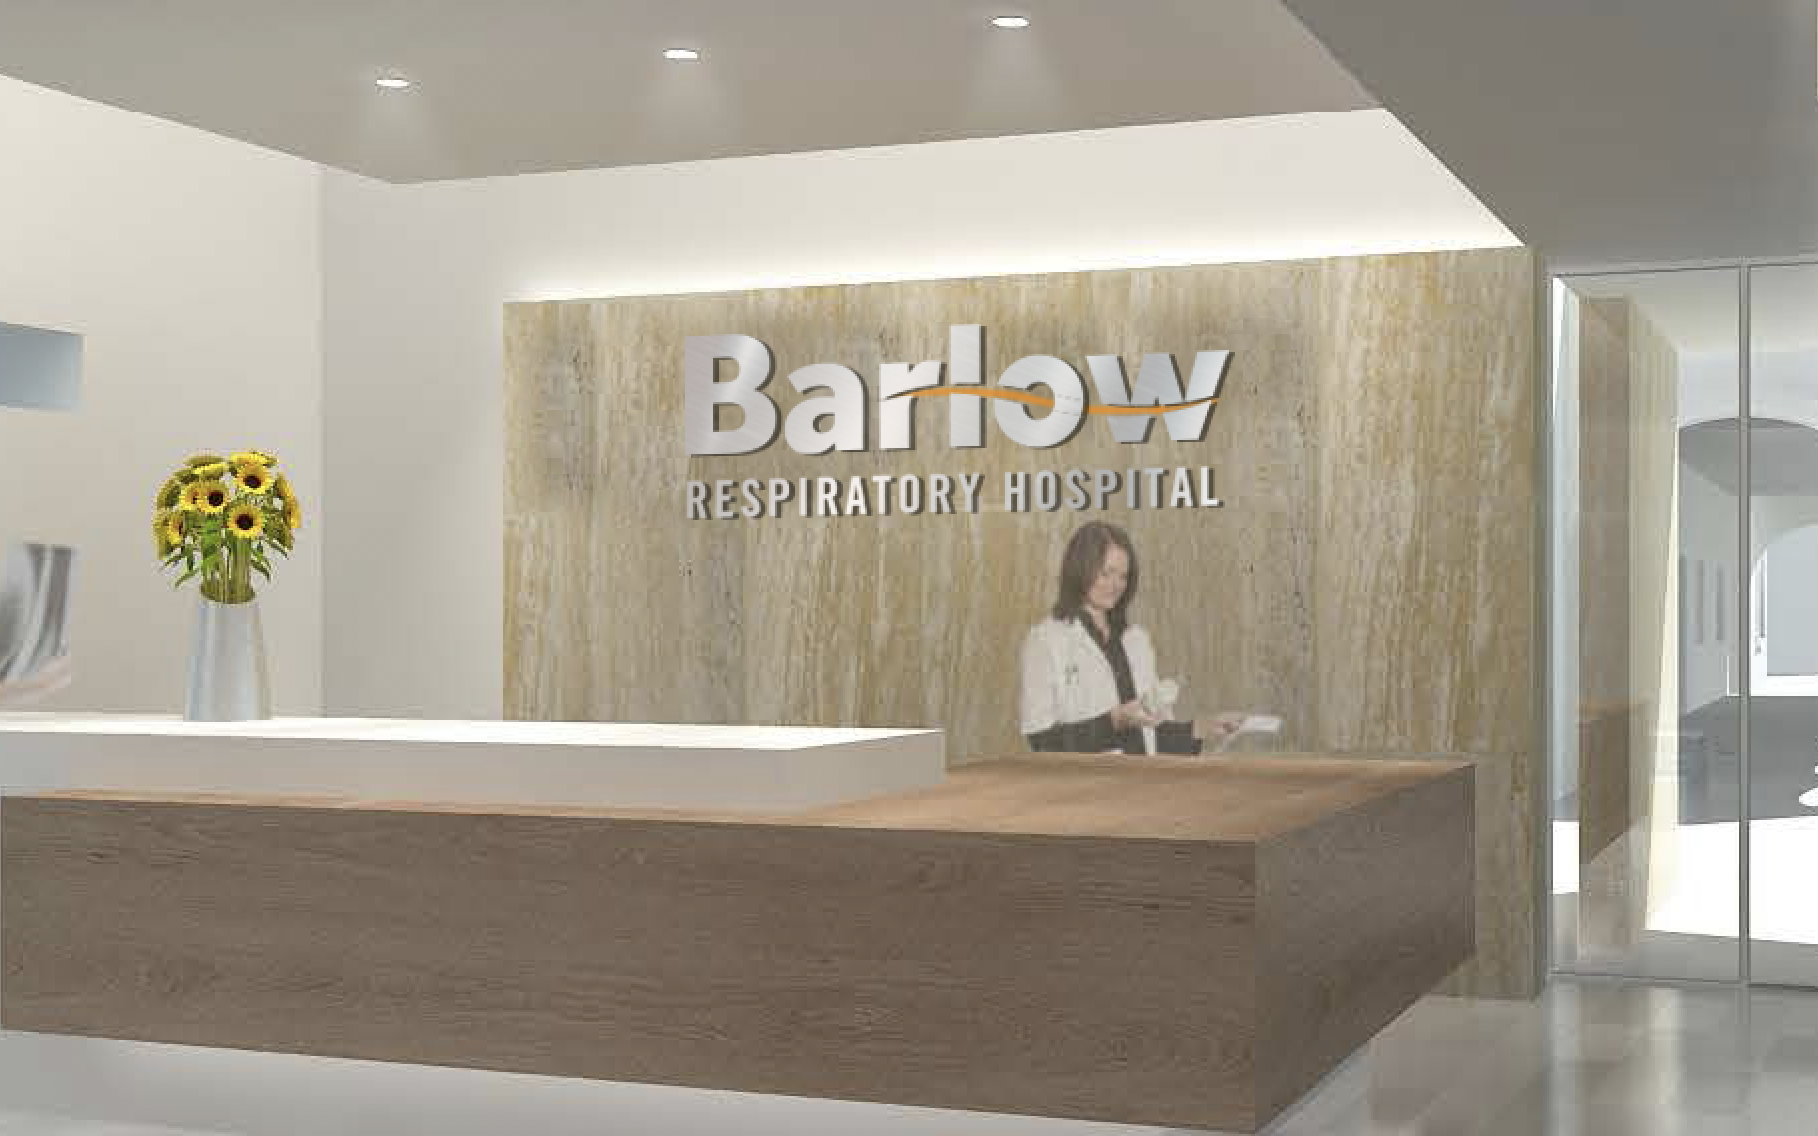 Barlow respiratory hospital